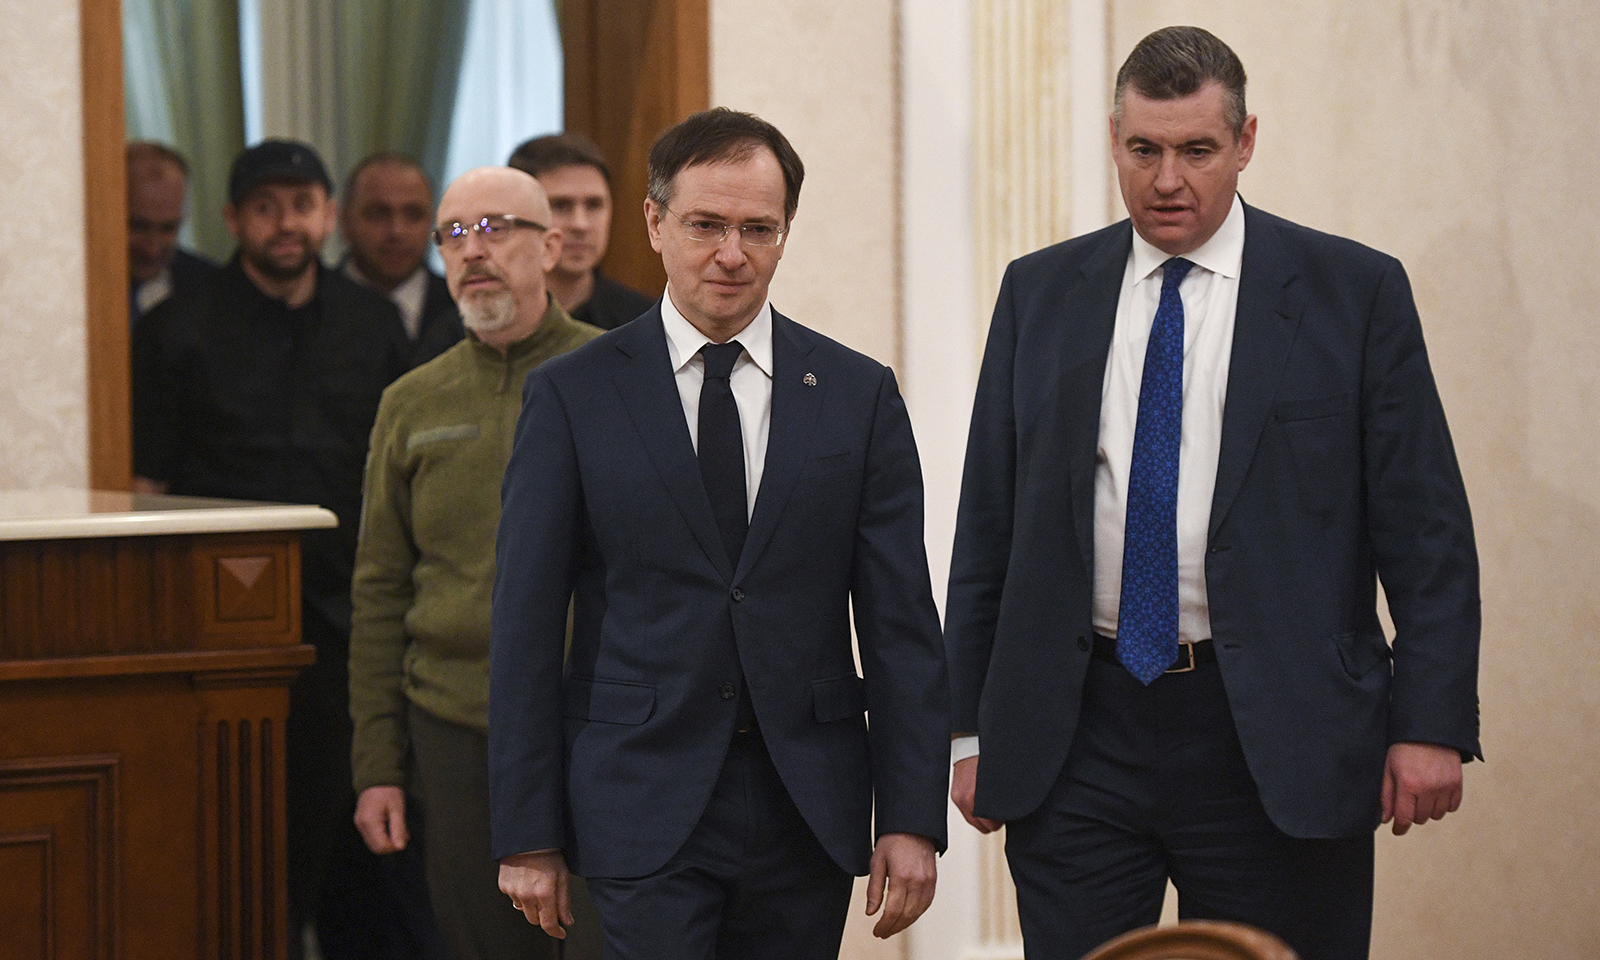 Russian Presidential Aide Vladimir Medinsky, left, and Russian State Duma member Leonid Slutsky, followed by the Ukrainian delegation arrive for Russian-Ukrainian talks in Belarus on February 28.